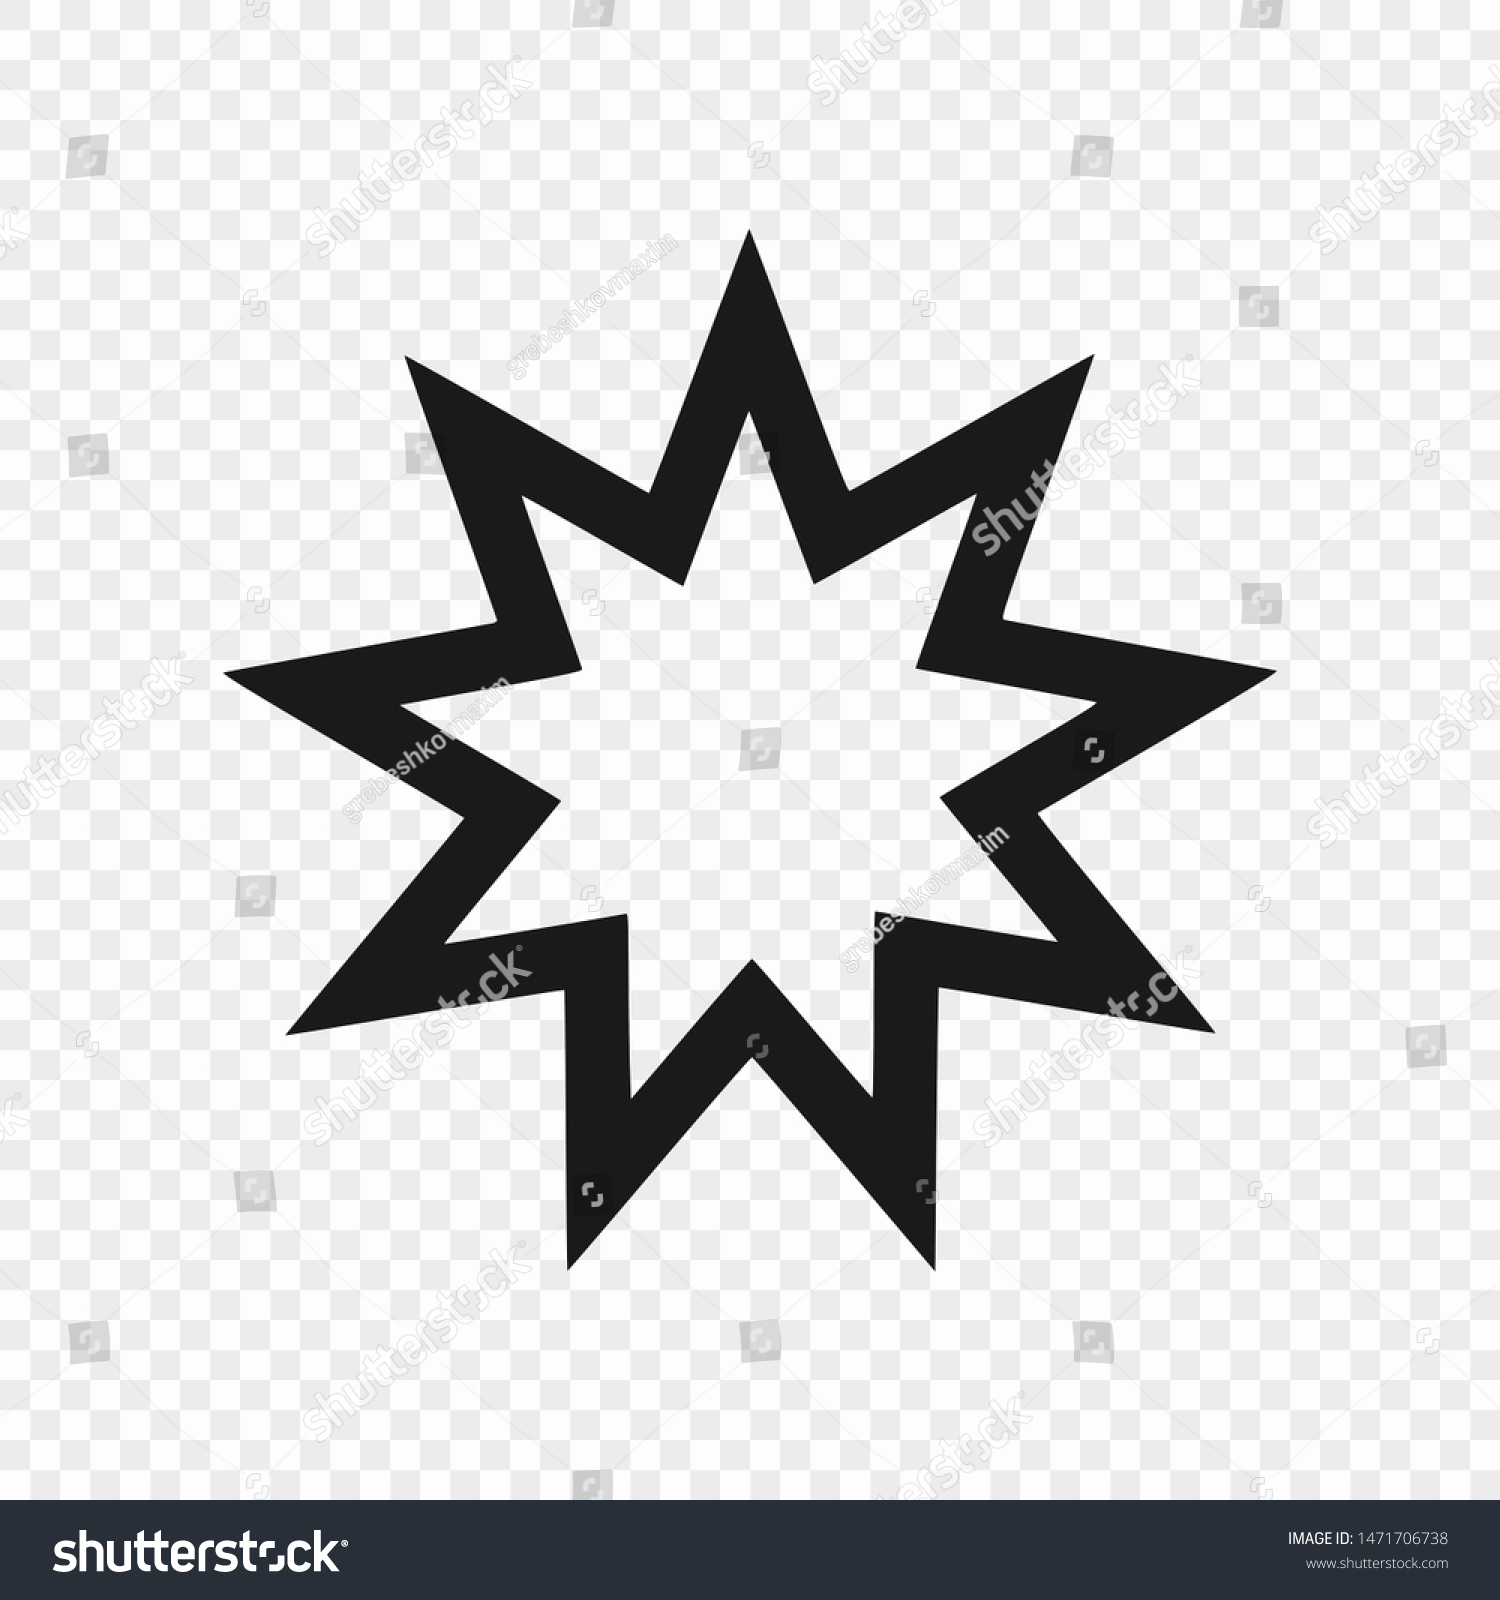 SVG of Nine pointed star - Symbol of Bahai Faith / Bahaism. Vector illustration svg